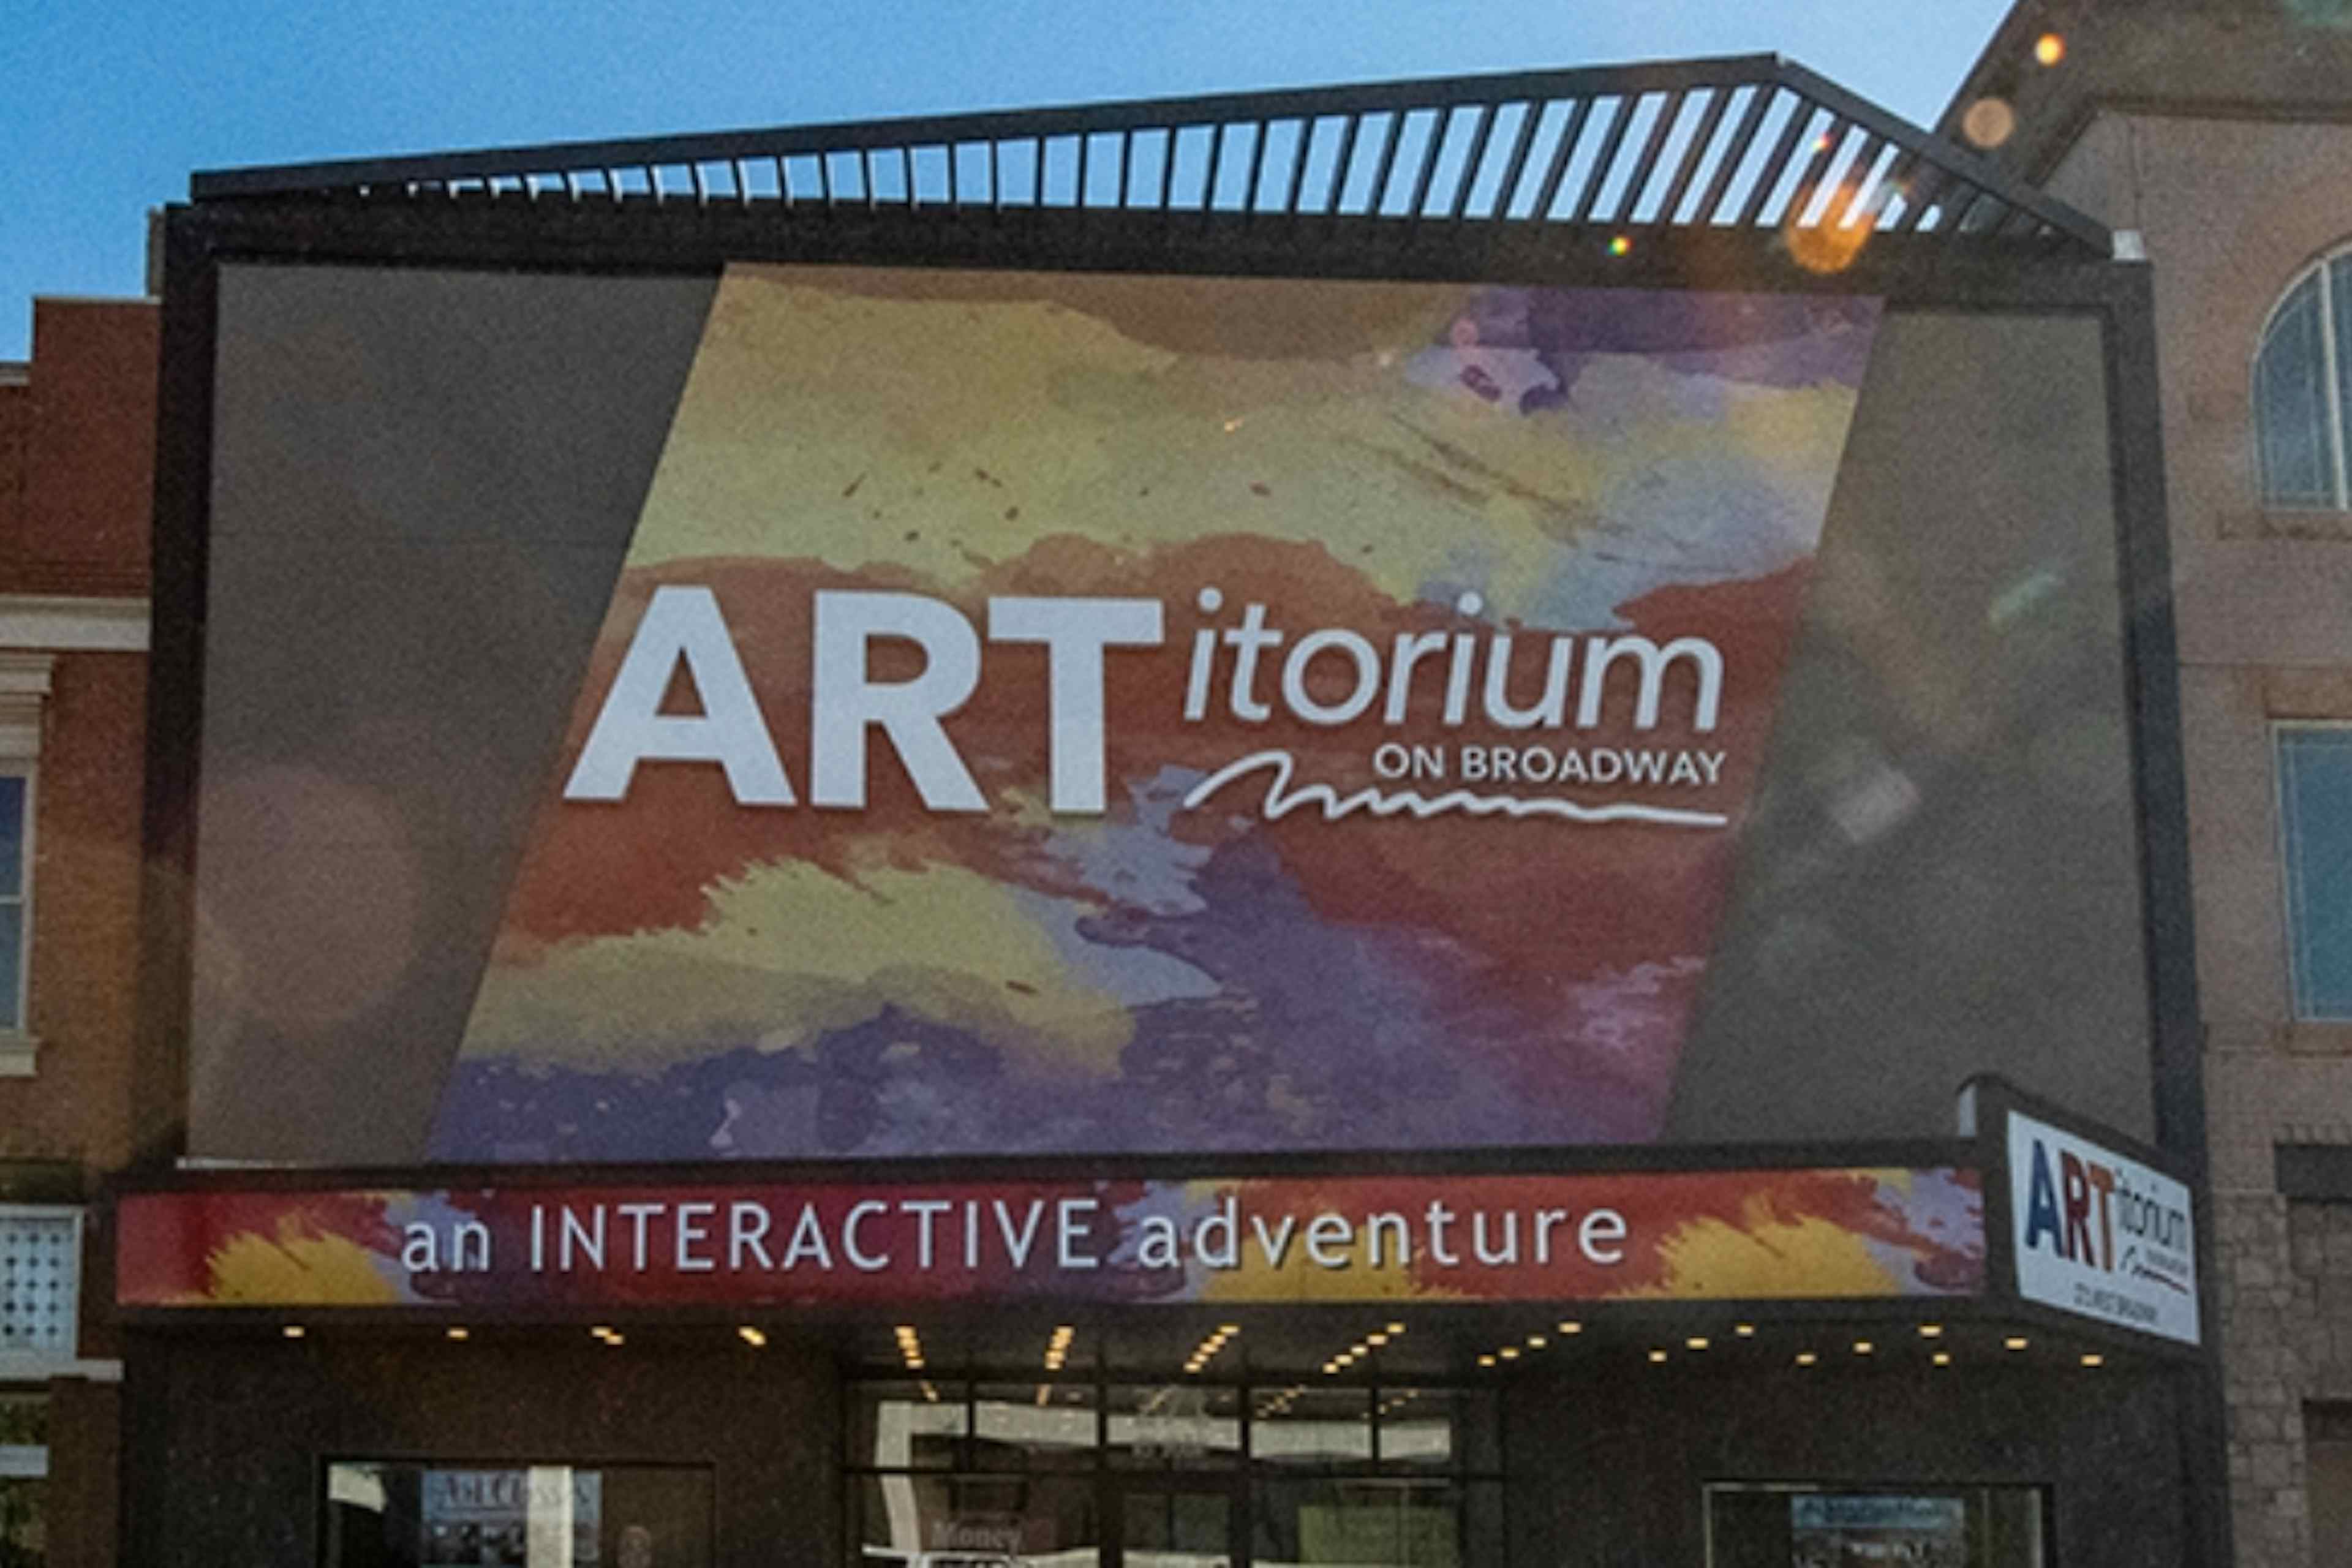 ARTitorium on Broadway sign in downtown Idaho Falls